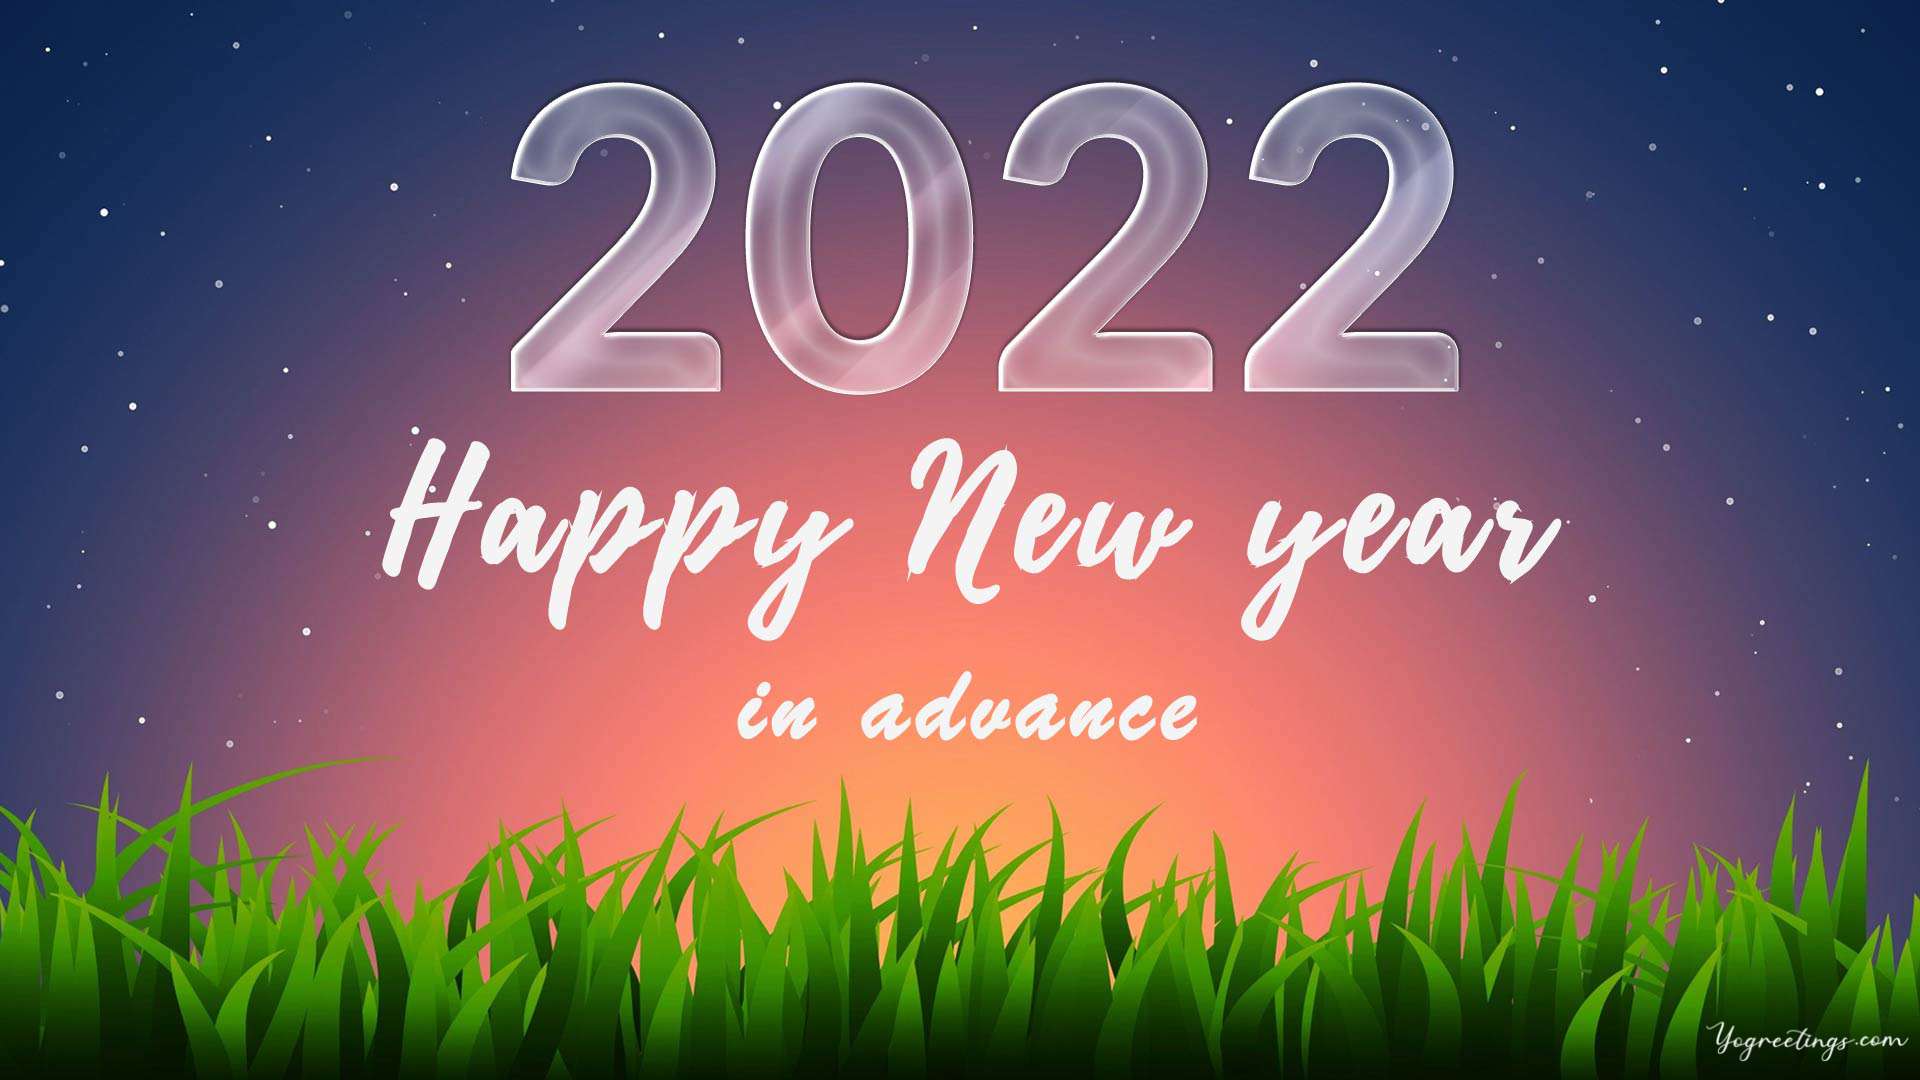 Free download beautiful new year 2022 wallpaper for desktop